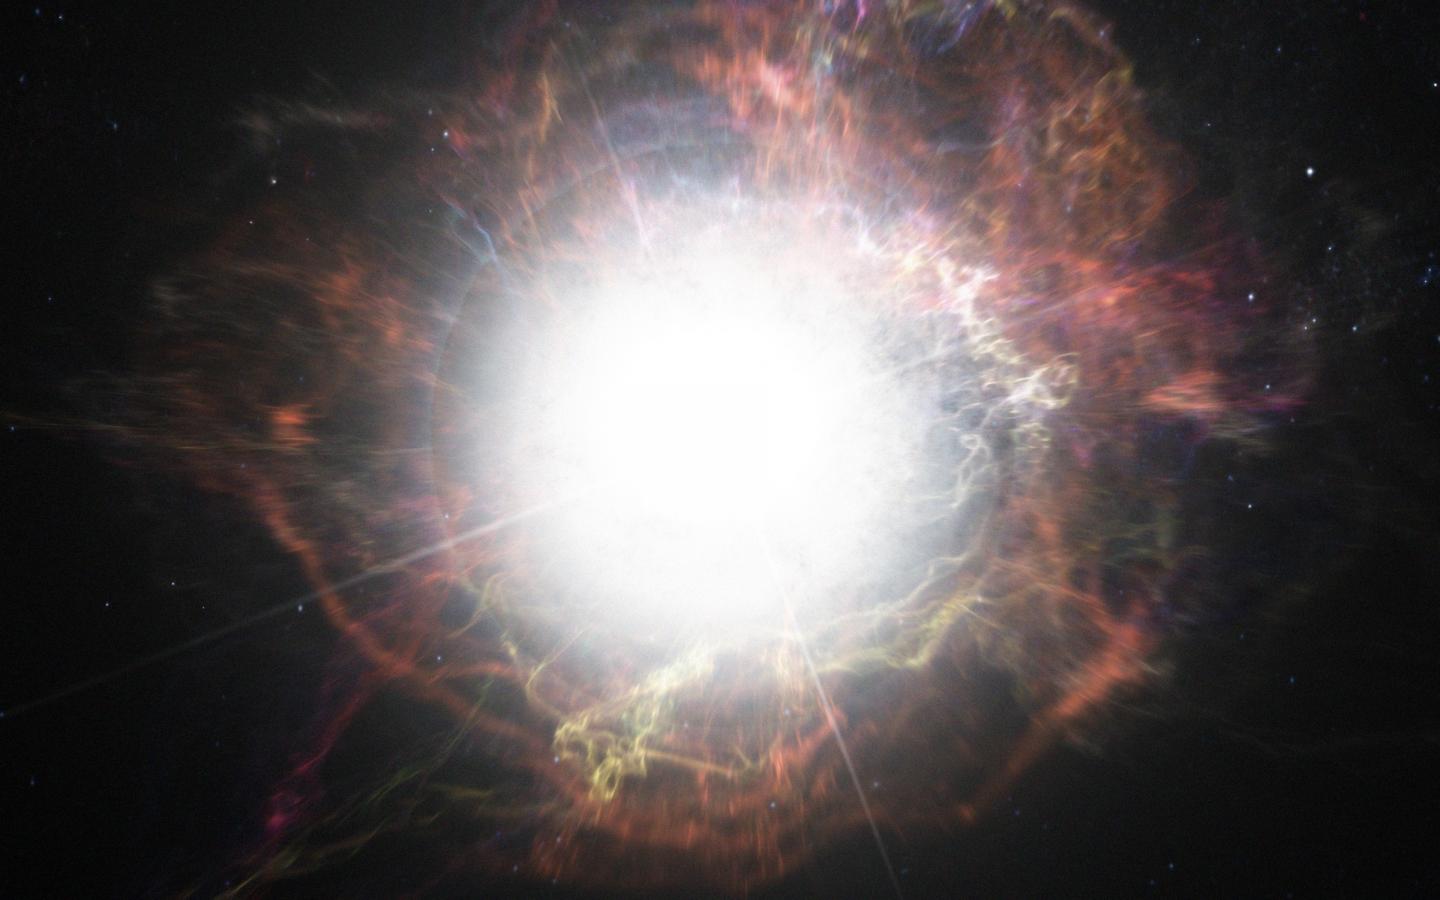 Artist's Concept of a Supernova